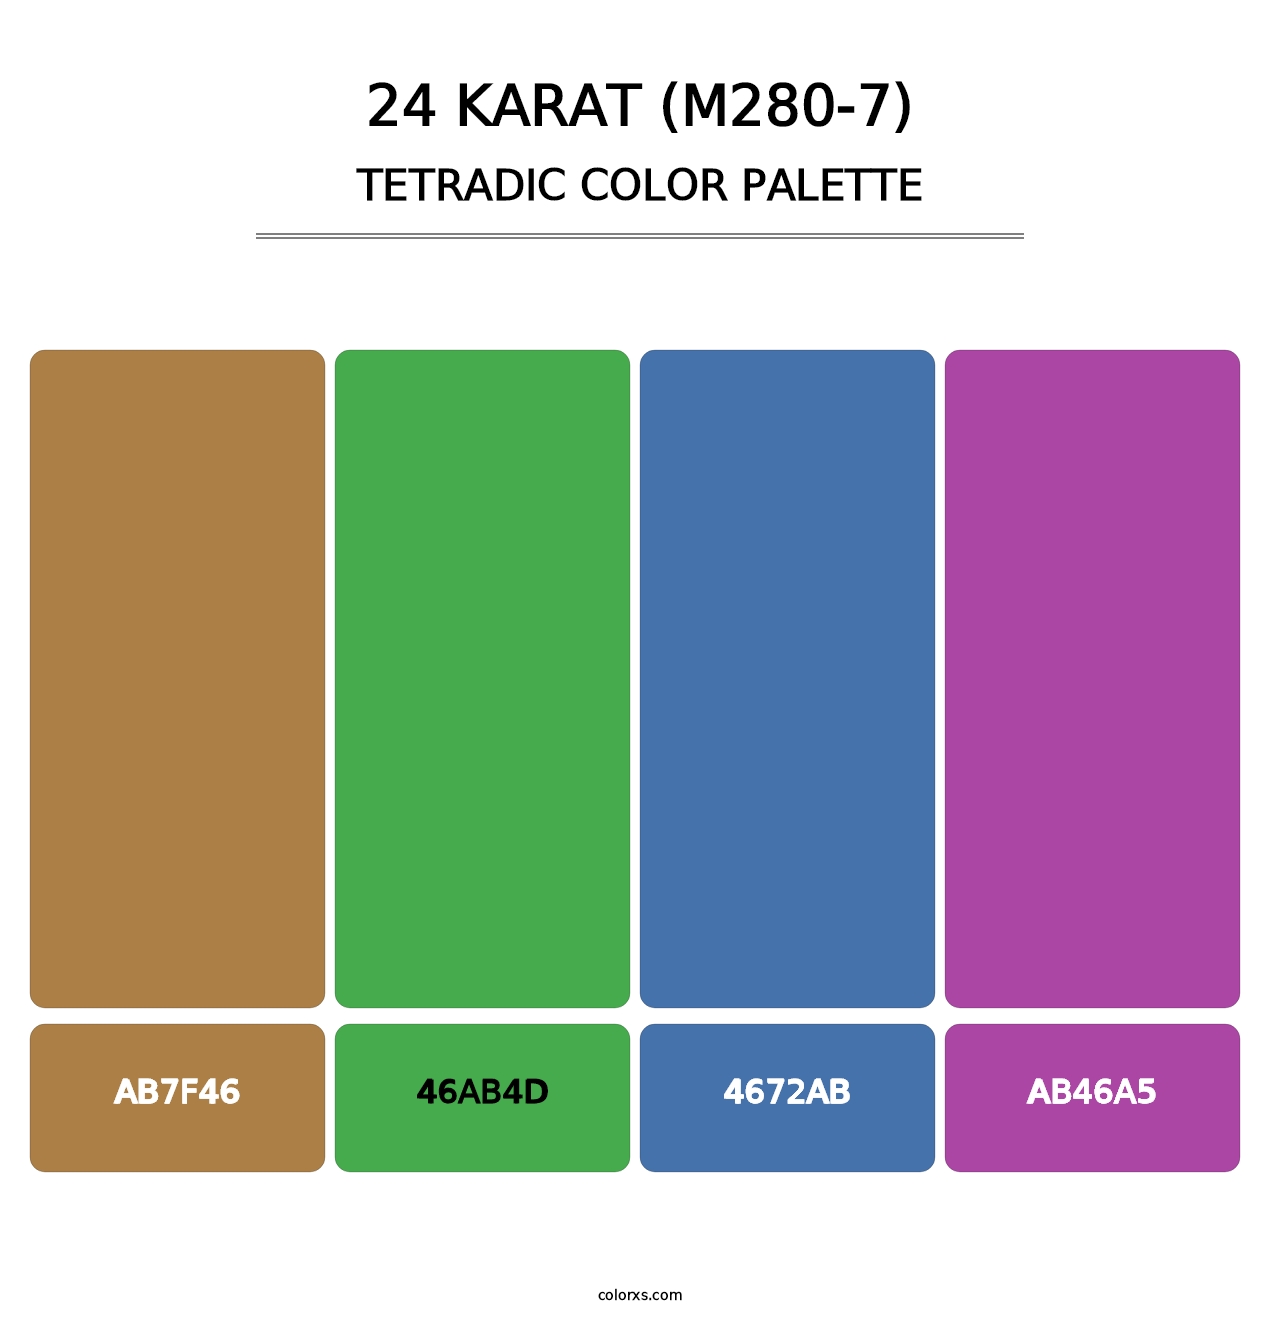 24 Karat (M280-7) - Tetradic Color Palette